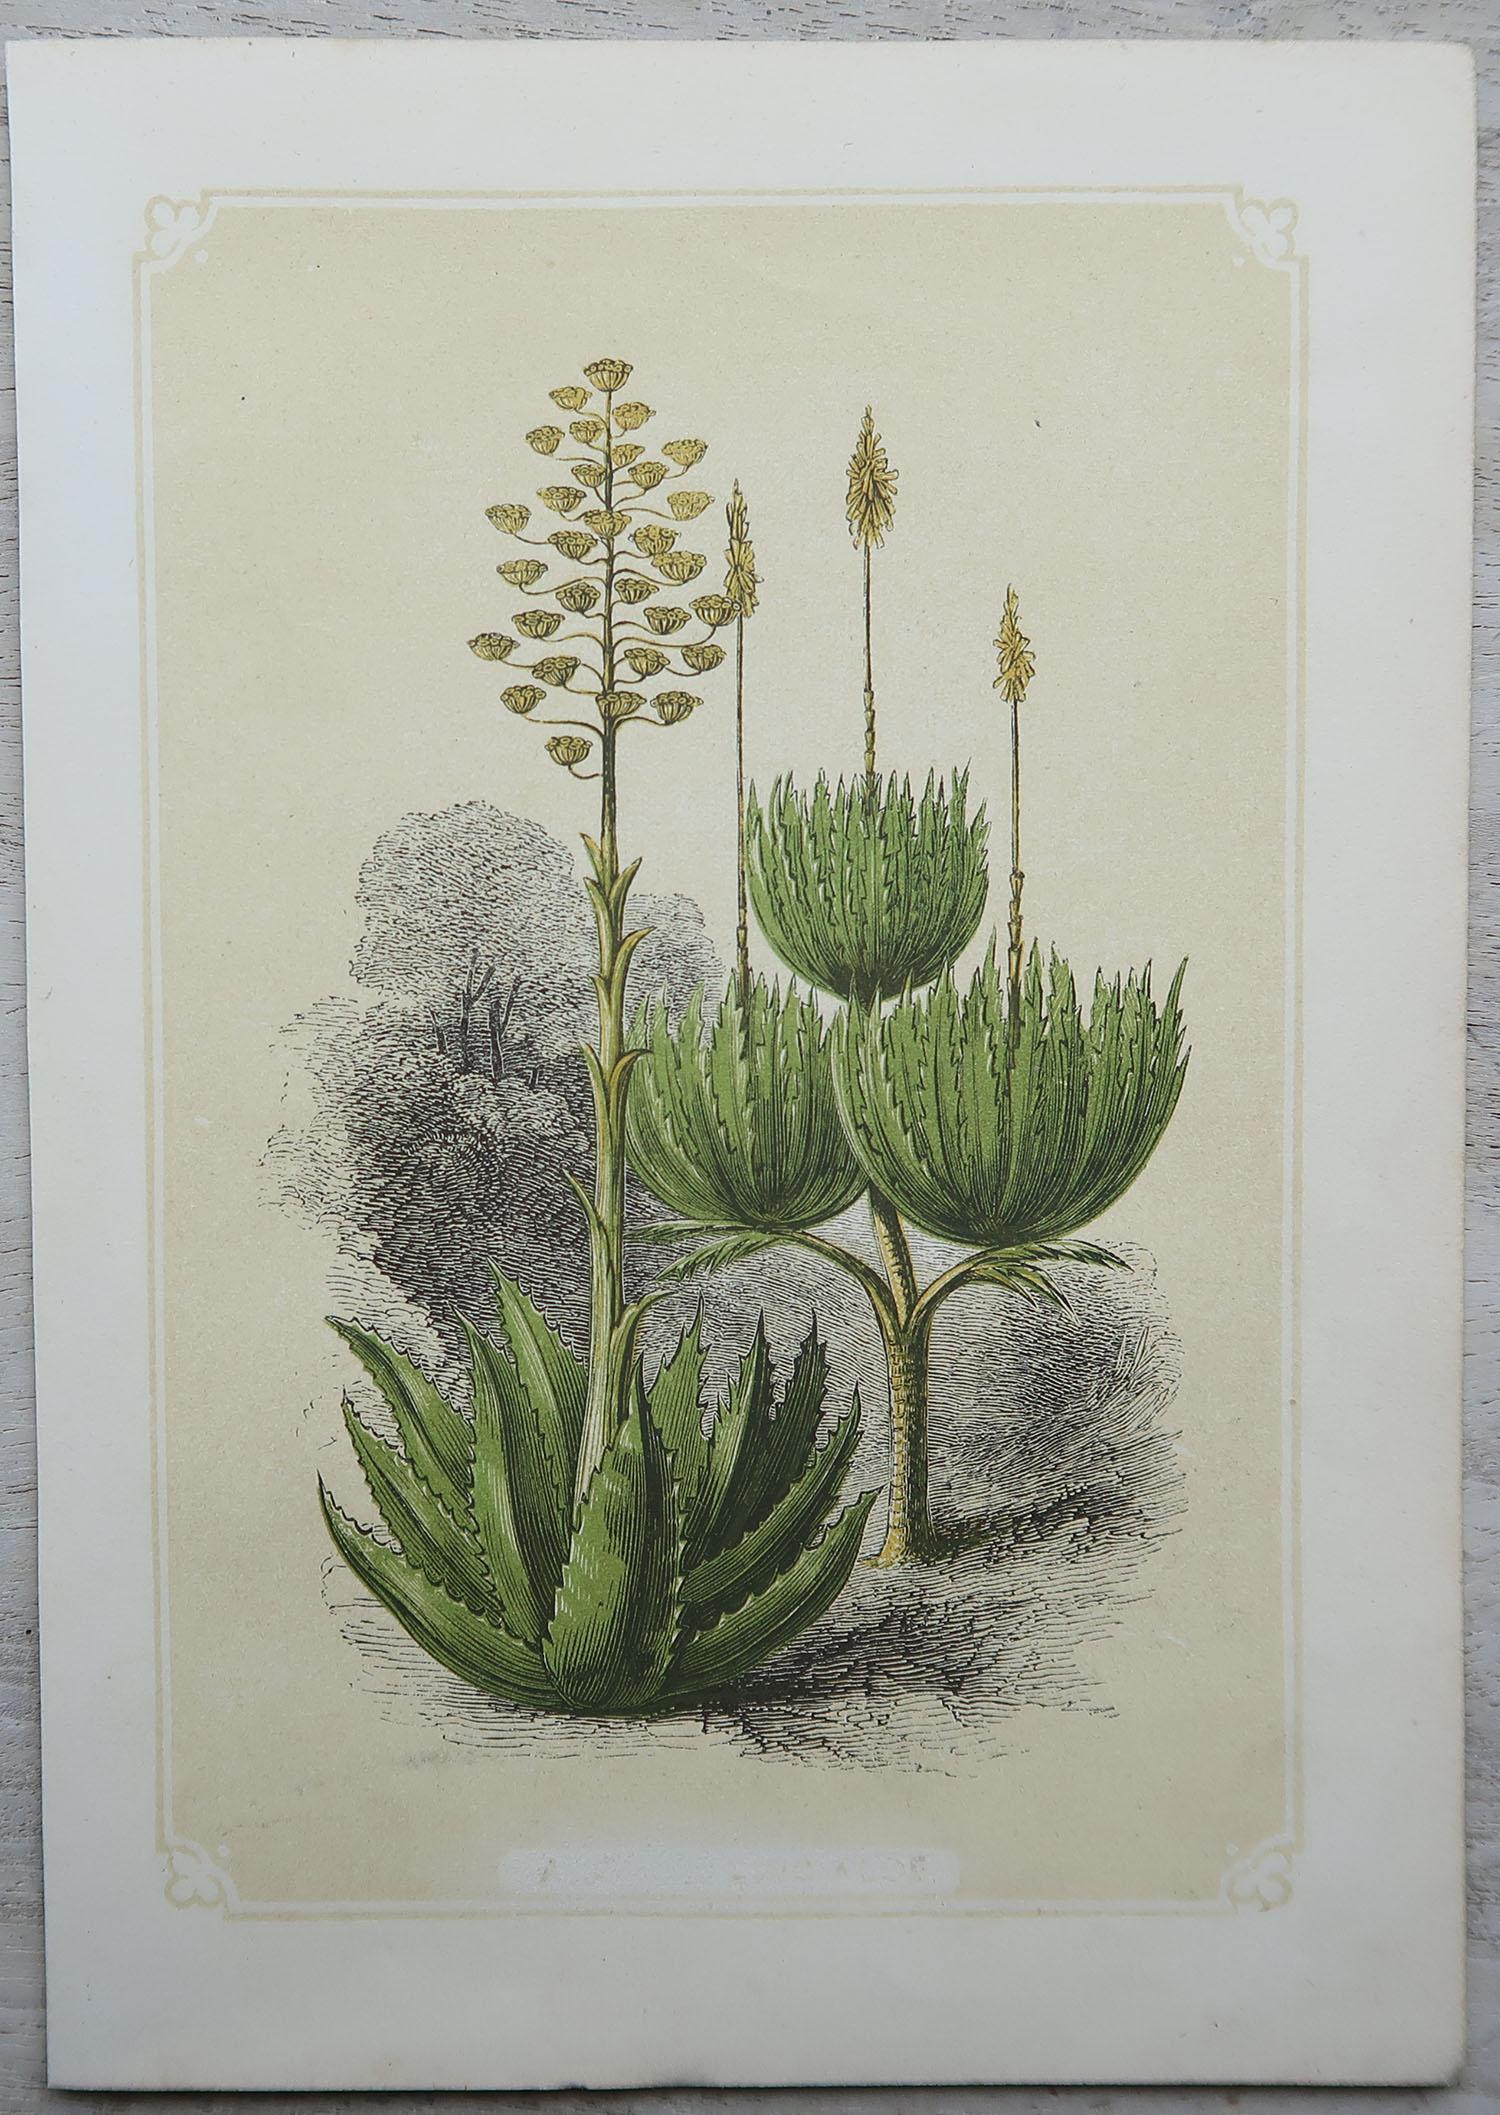 Other Set of 12 Original Antique Botanical Prints 'Herbs & Spices', circa 1850